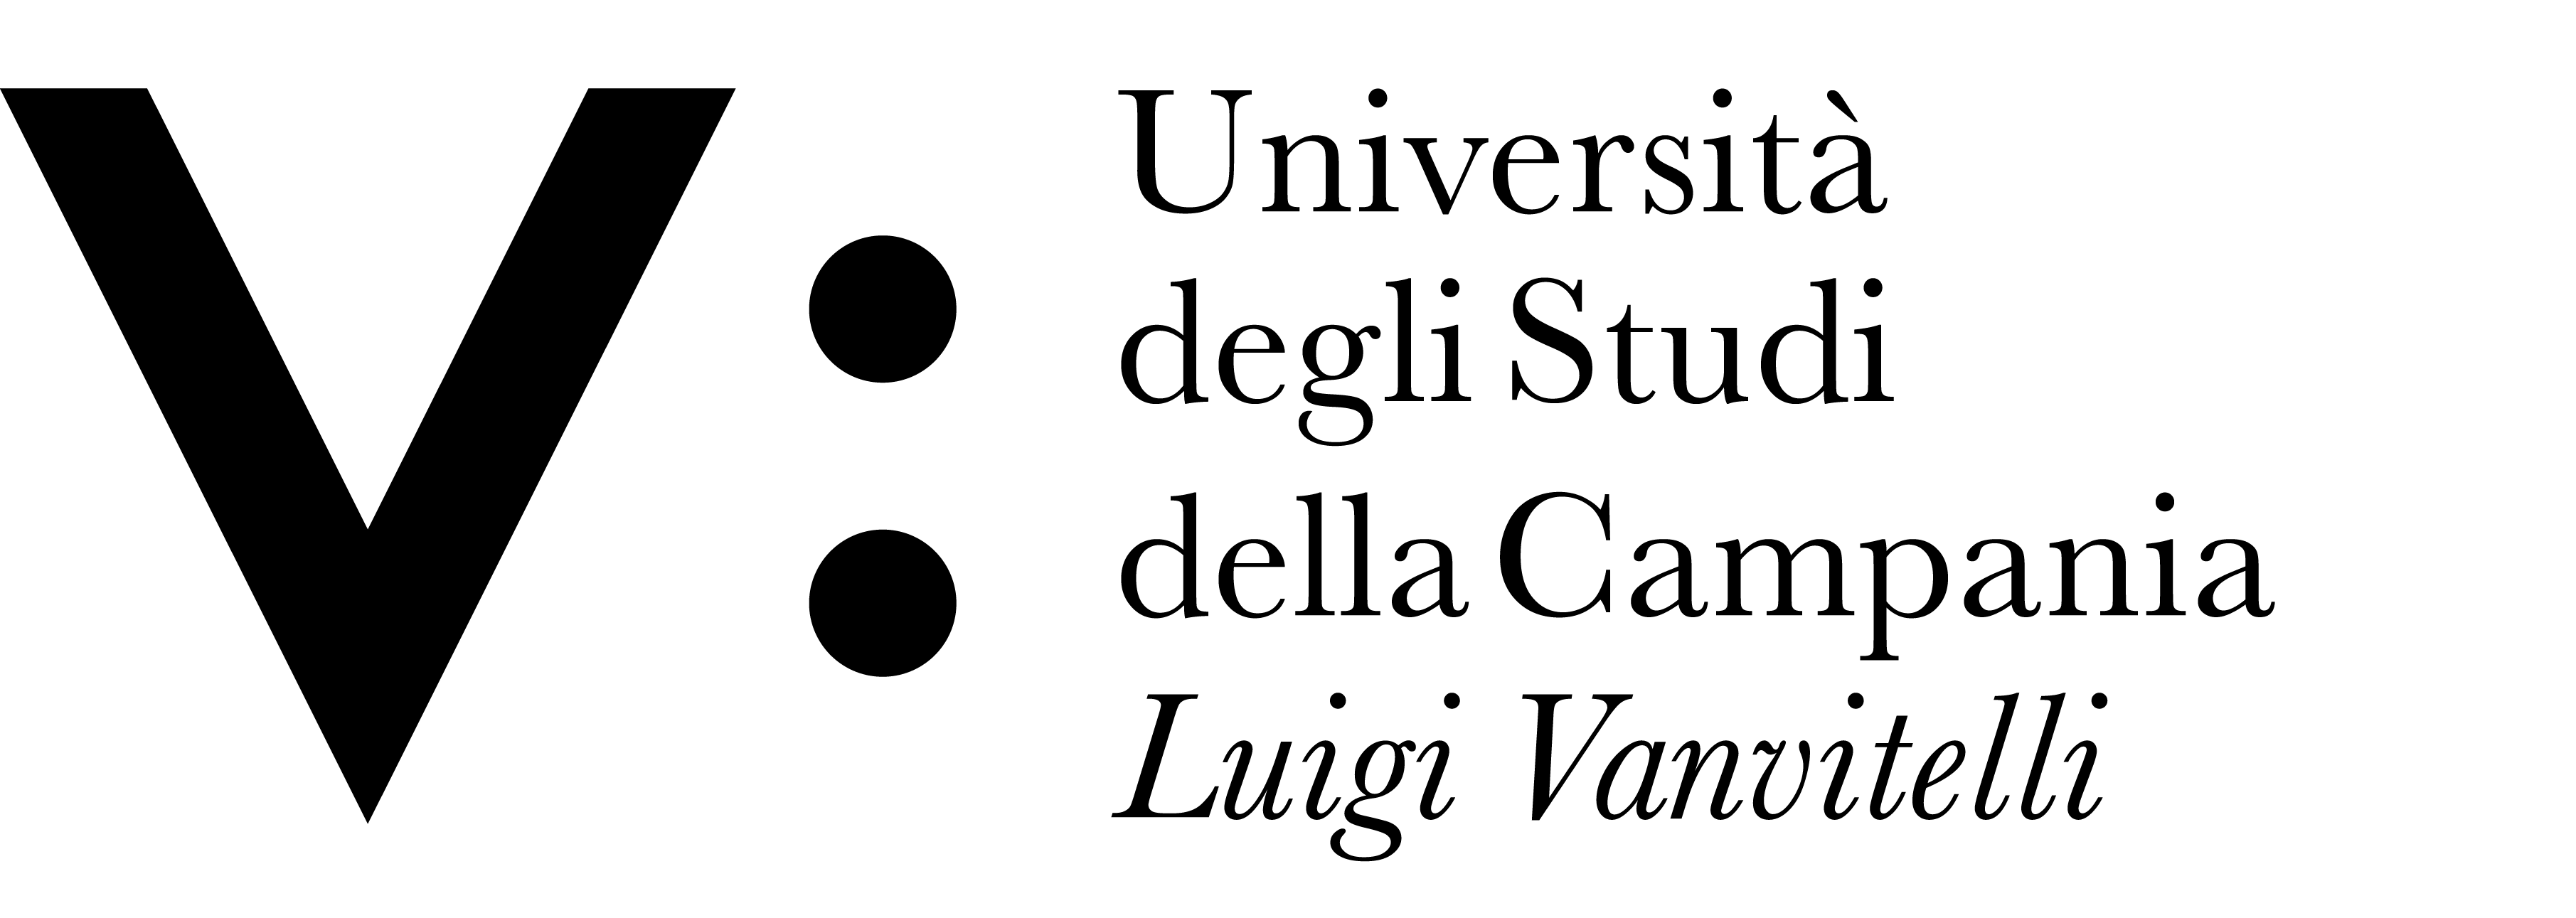 logo_Luigi-Vanvitelli